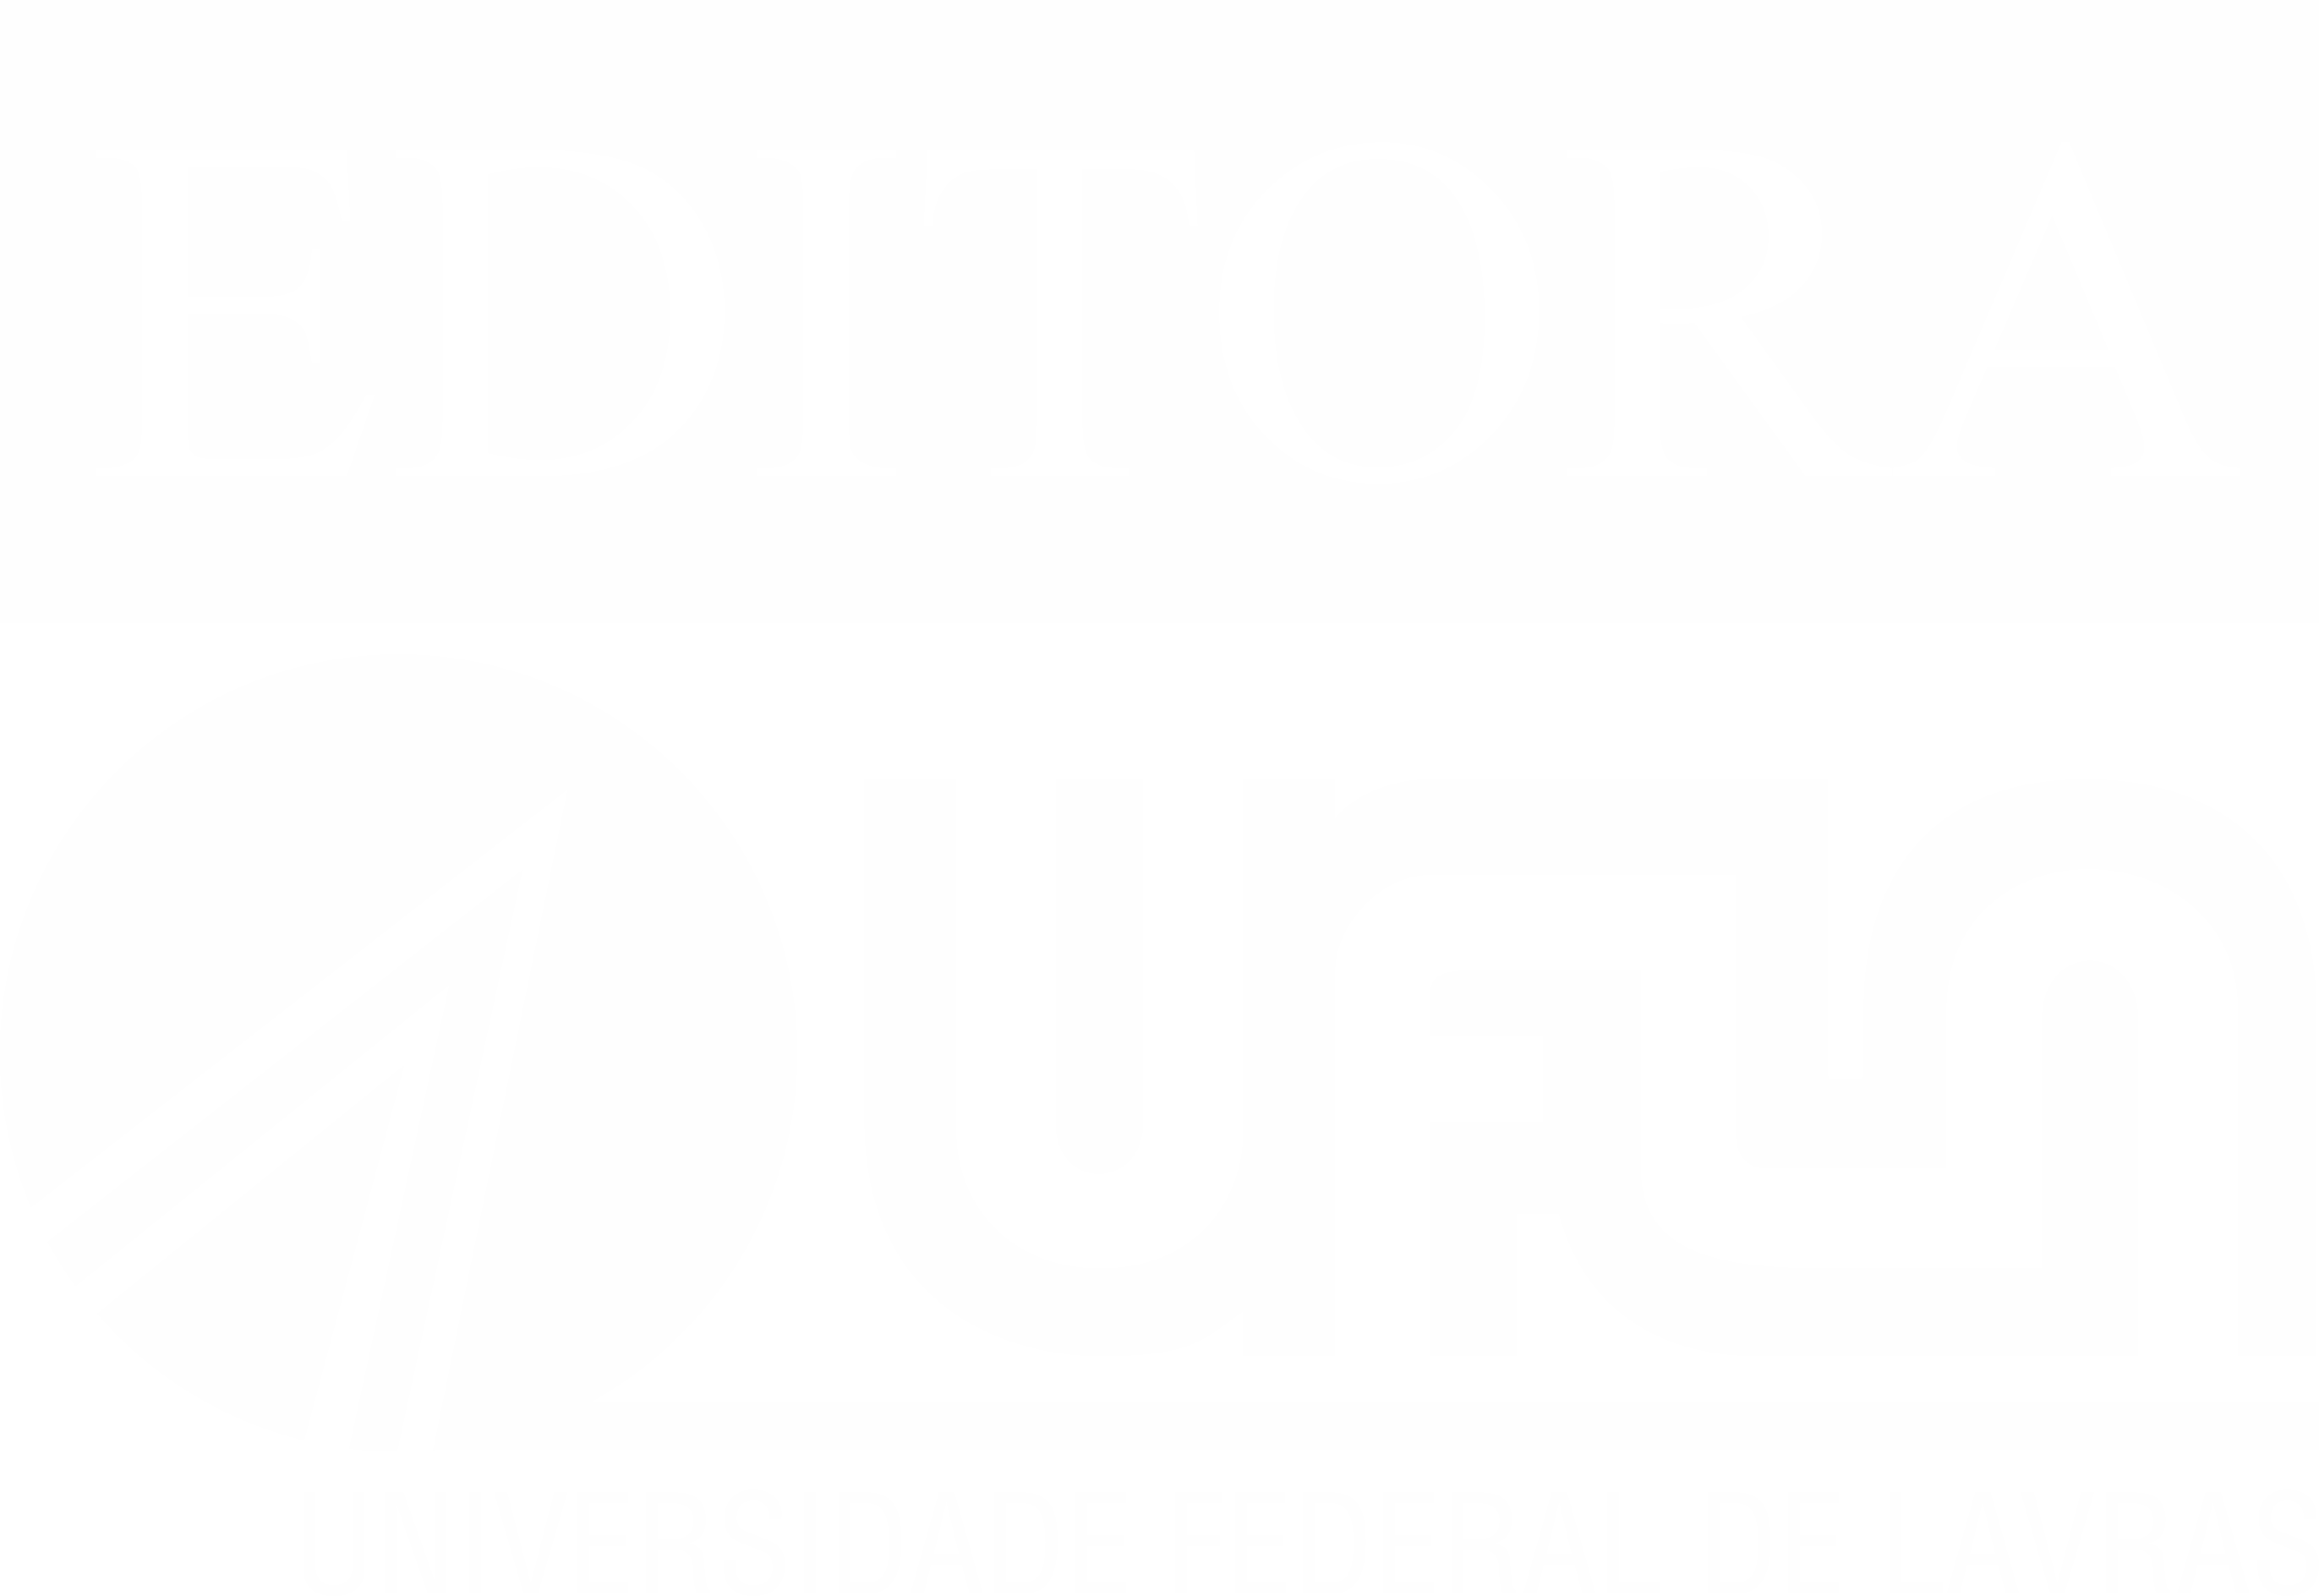 Logomarca da Ufla